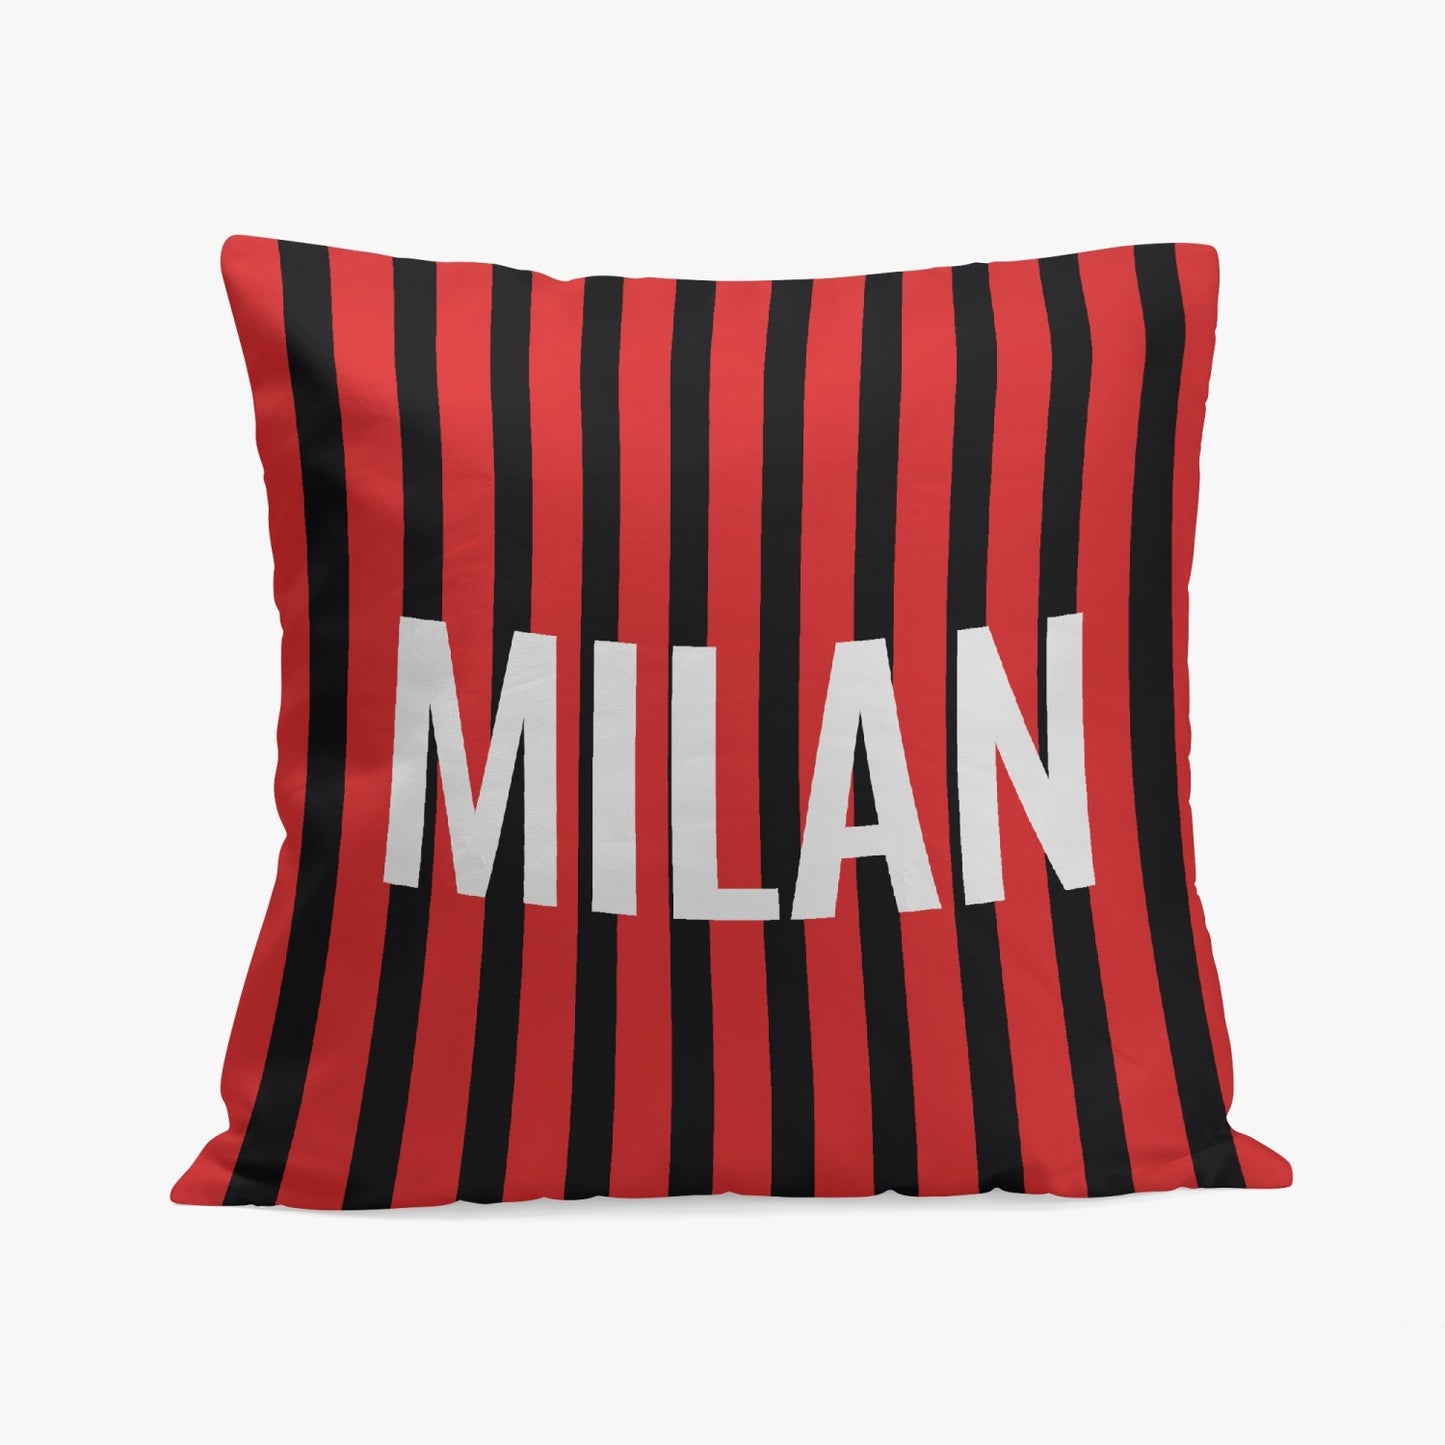 Milan Pillow Cover